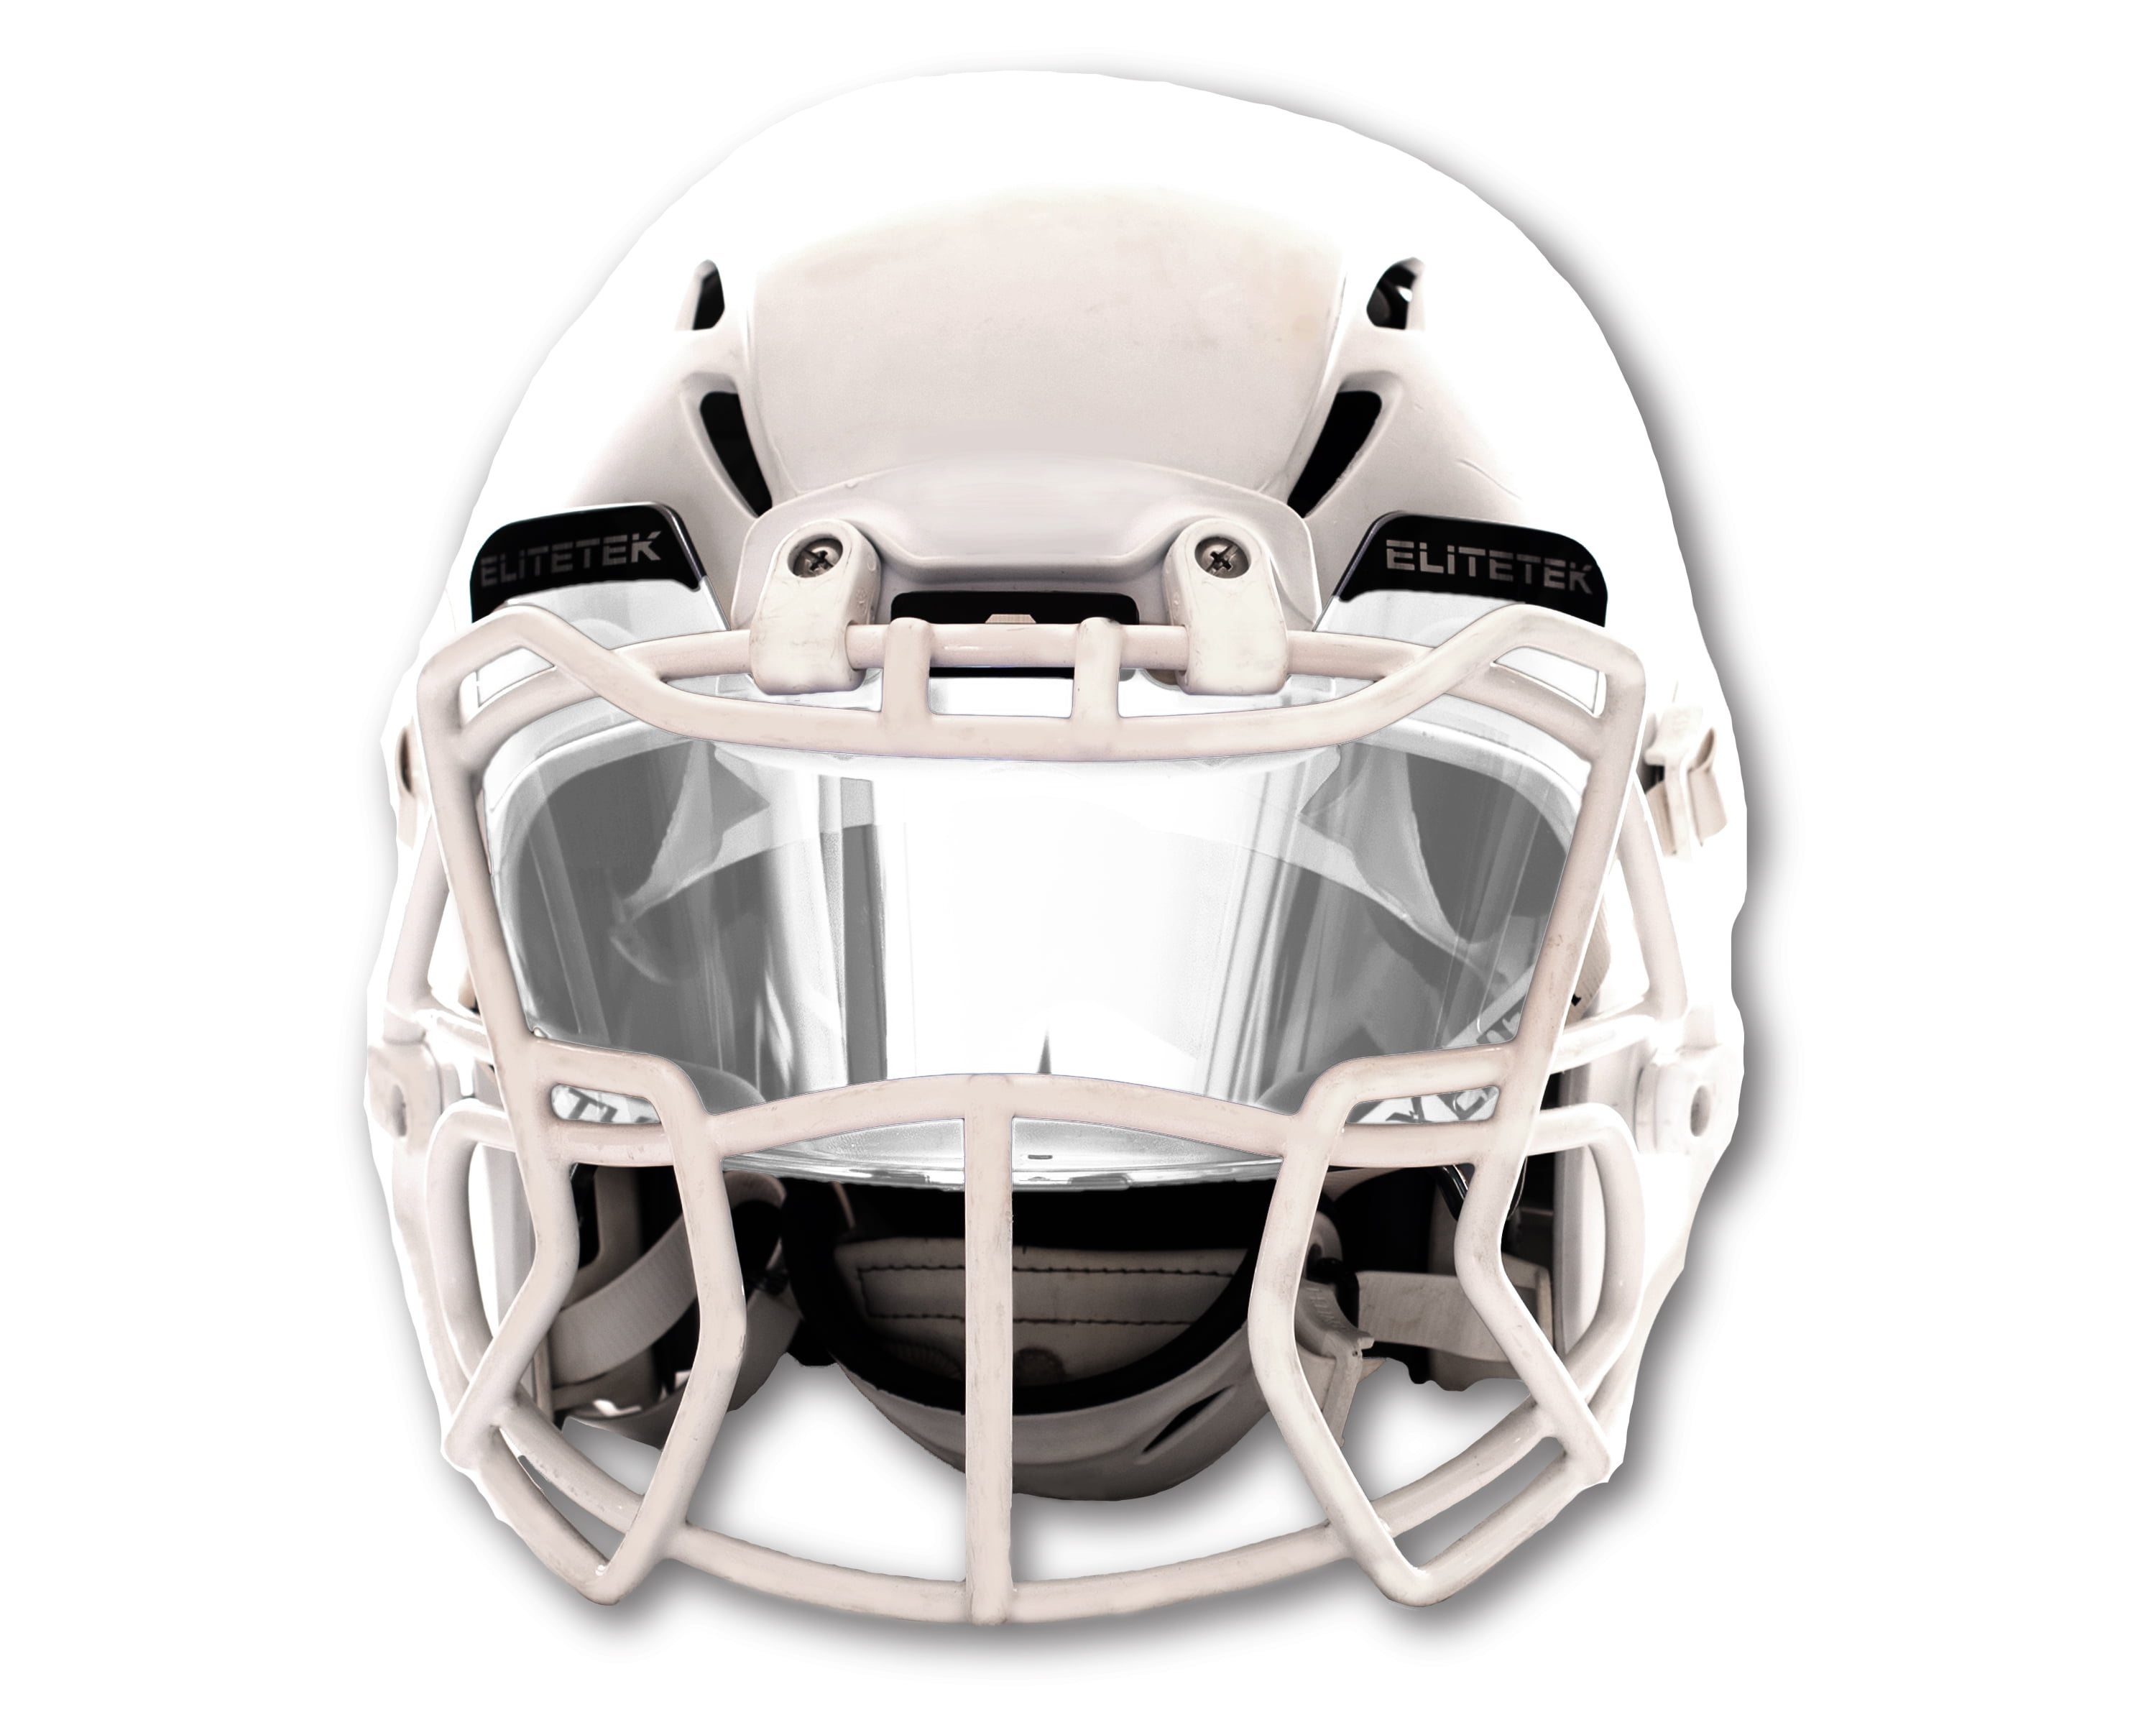 UNDER ARMOUR Football Helmet Visor Eye Shield QUICK-RELEASE Clips Hardware Set 